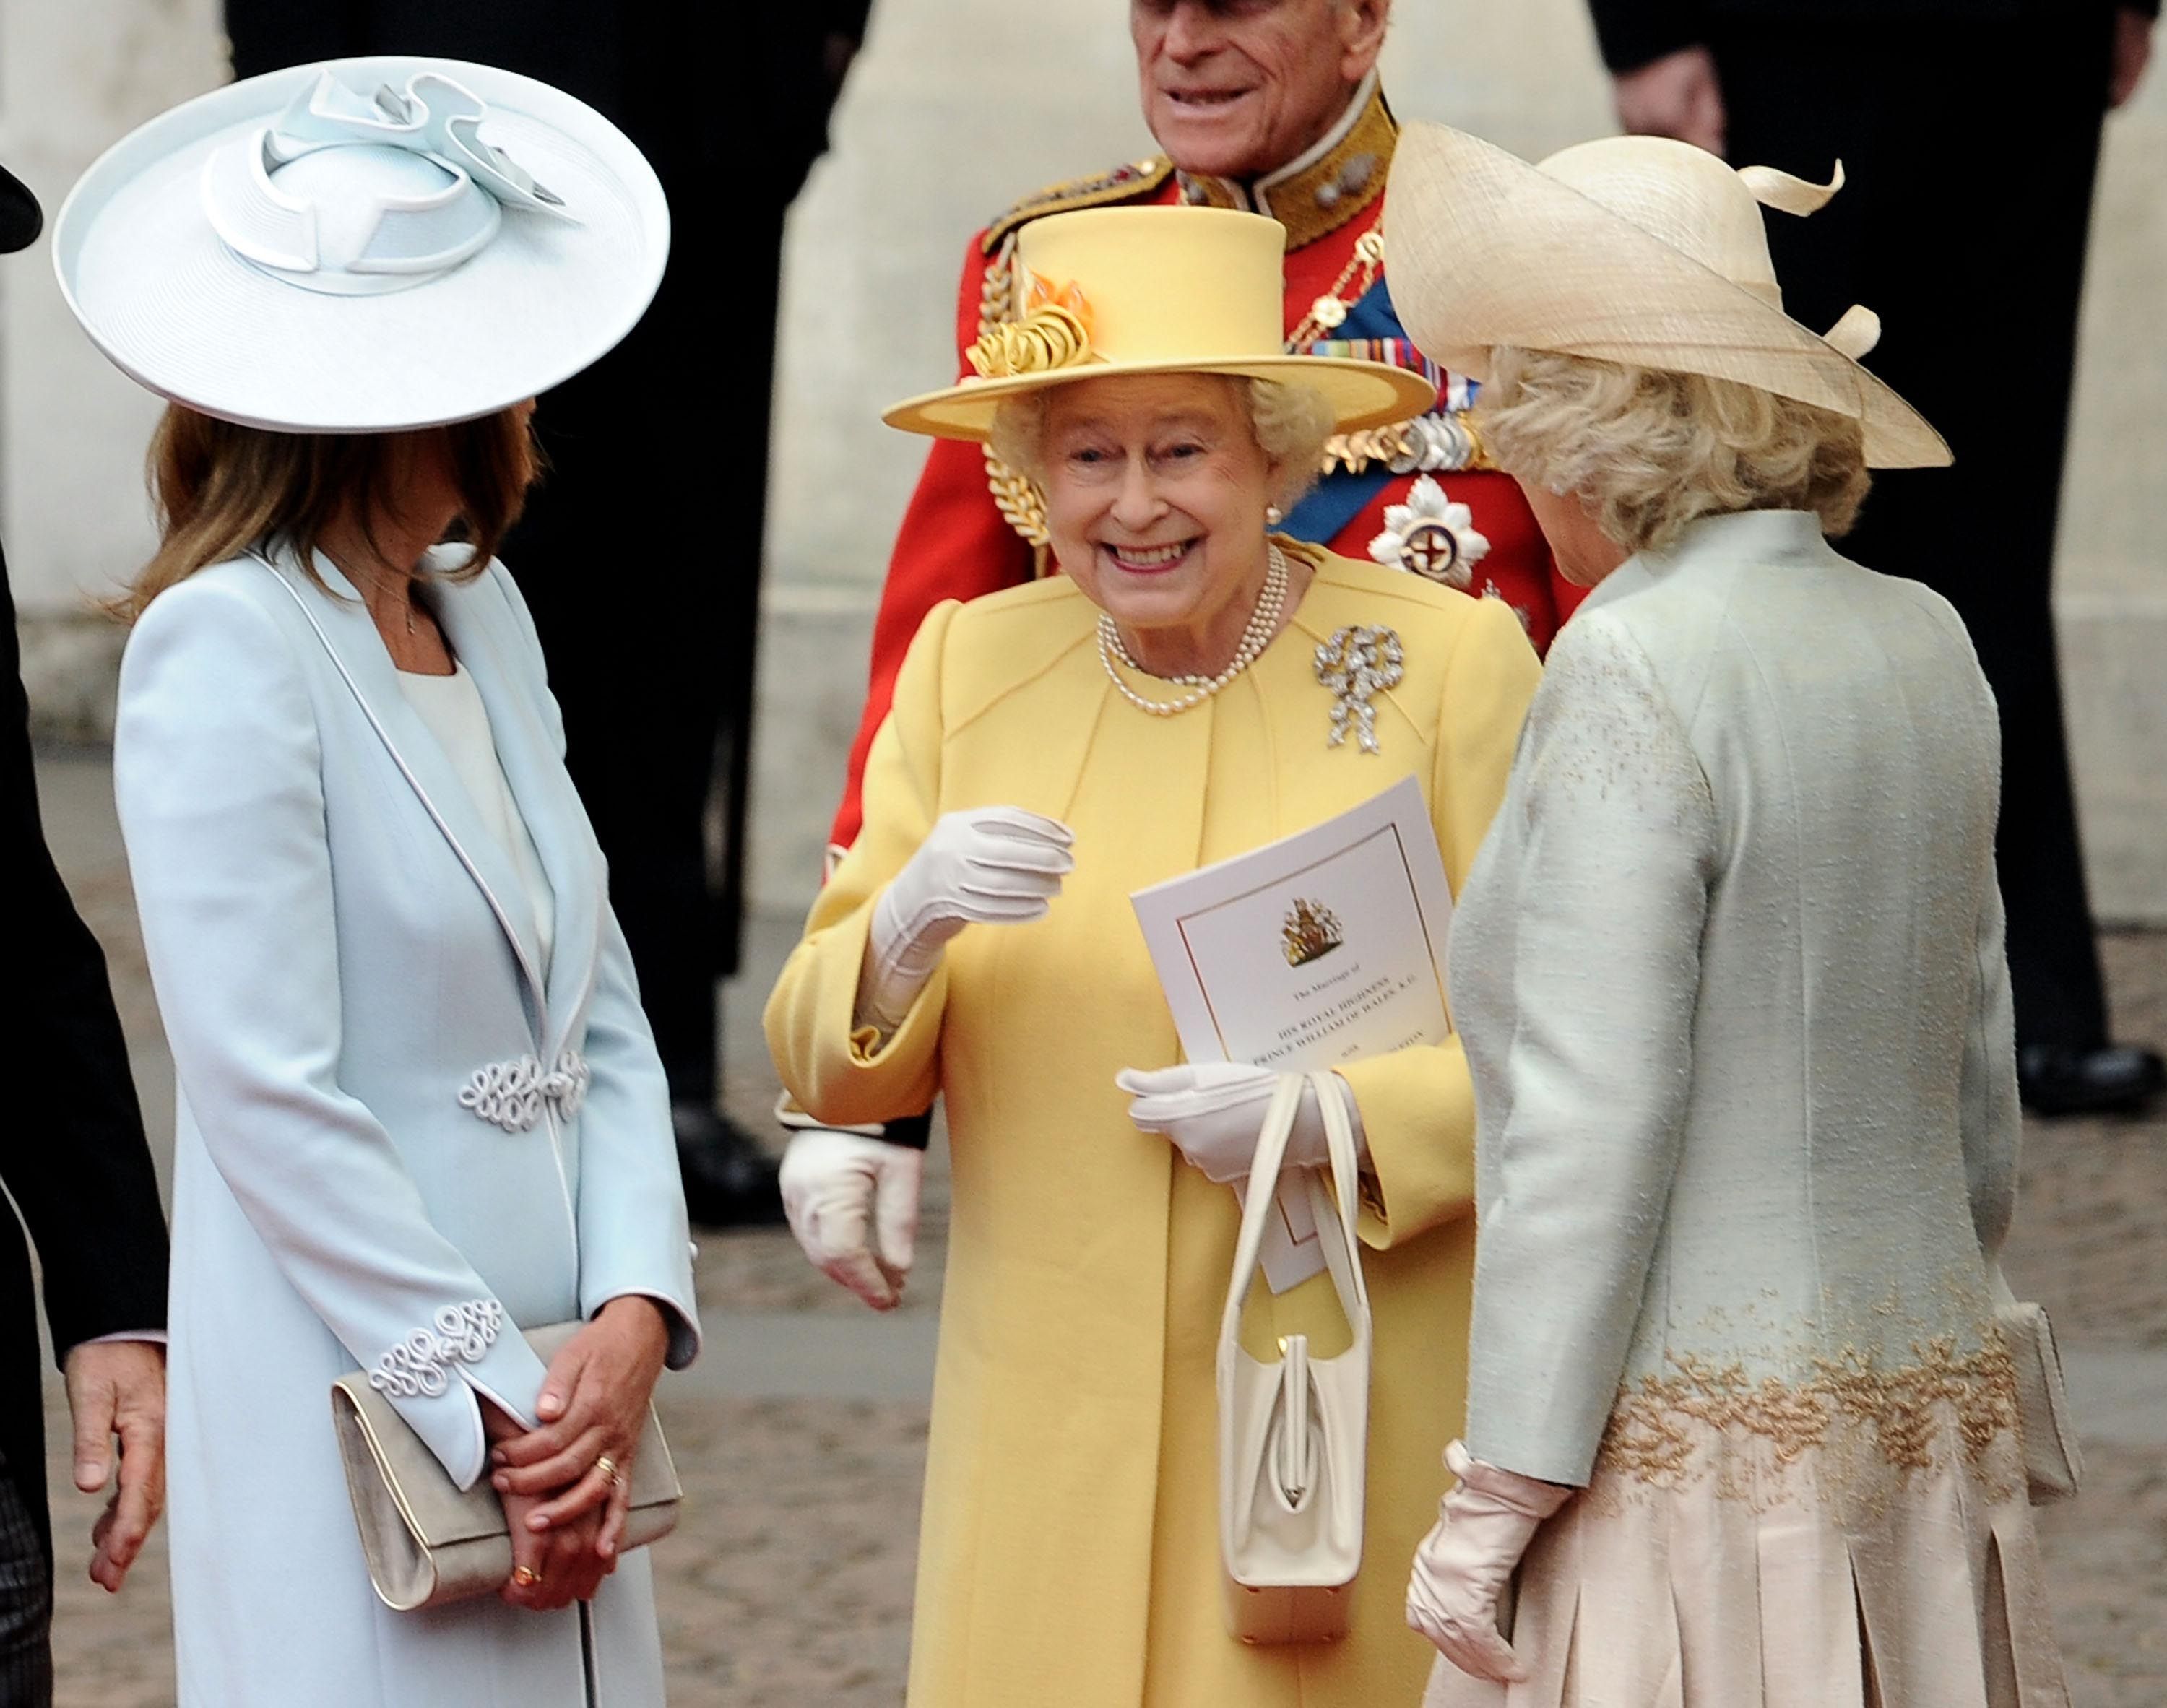 Queen uses her HANDBAG to send secret signals to her staff 